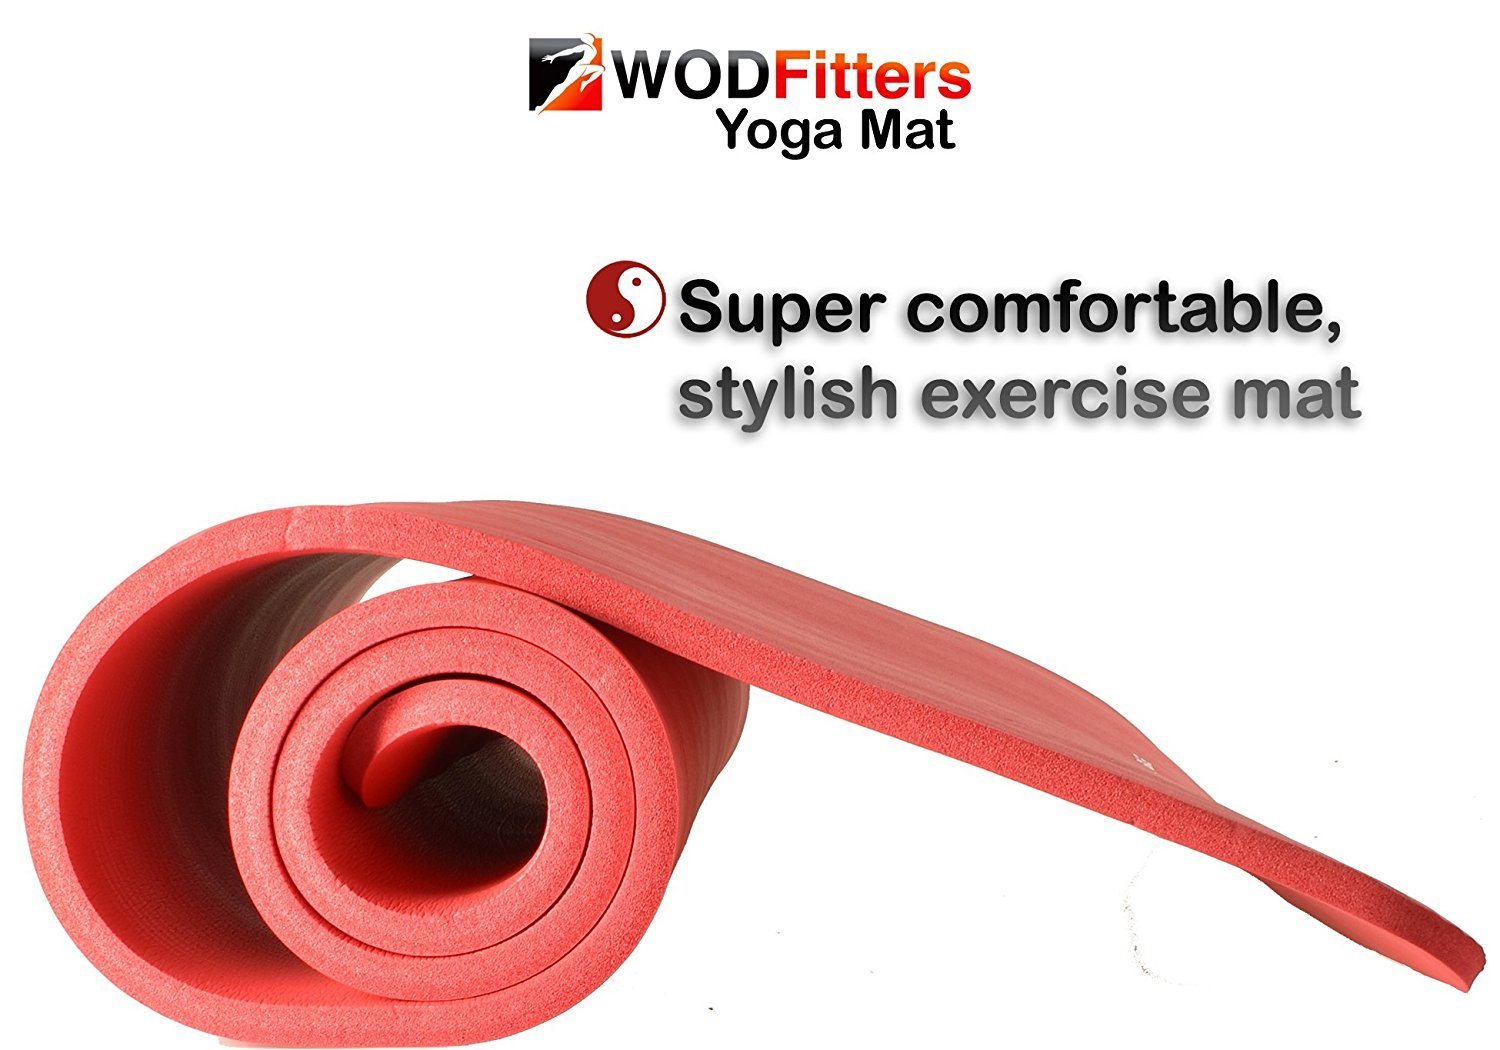 Yoga / Pilates / Workout Mat “ALL MUST GO” SALE” - Lot of 10 Mats + 2 FREE Microfiber Yoga Towels 